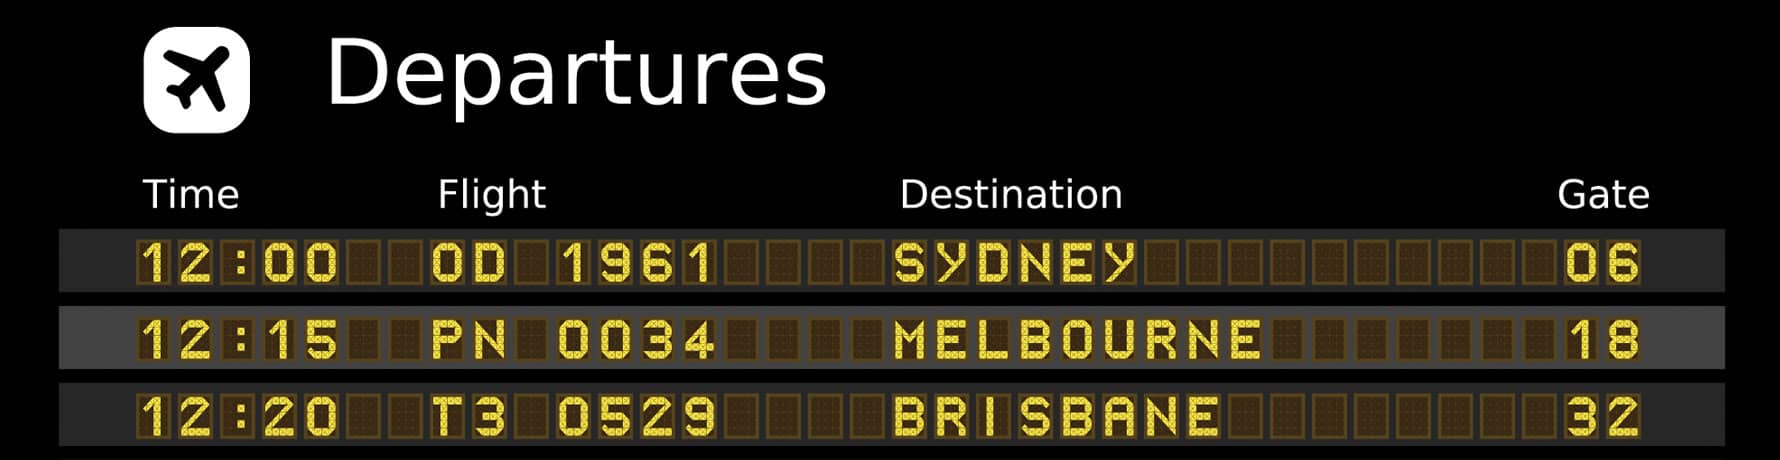 Aeropuertos en Australia